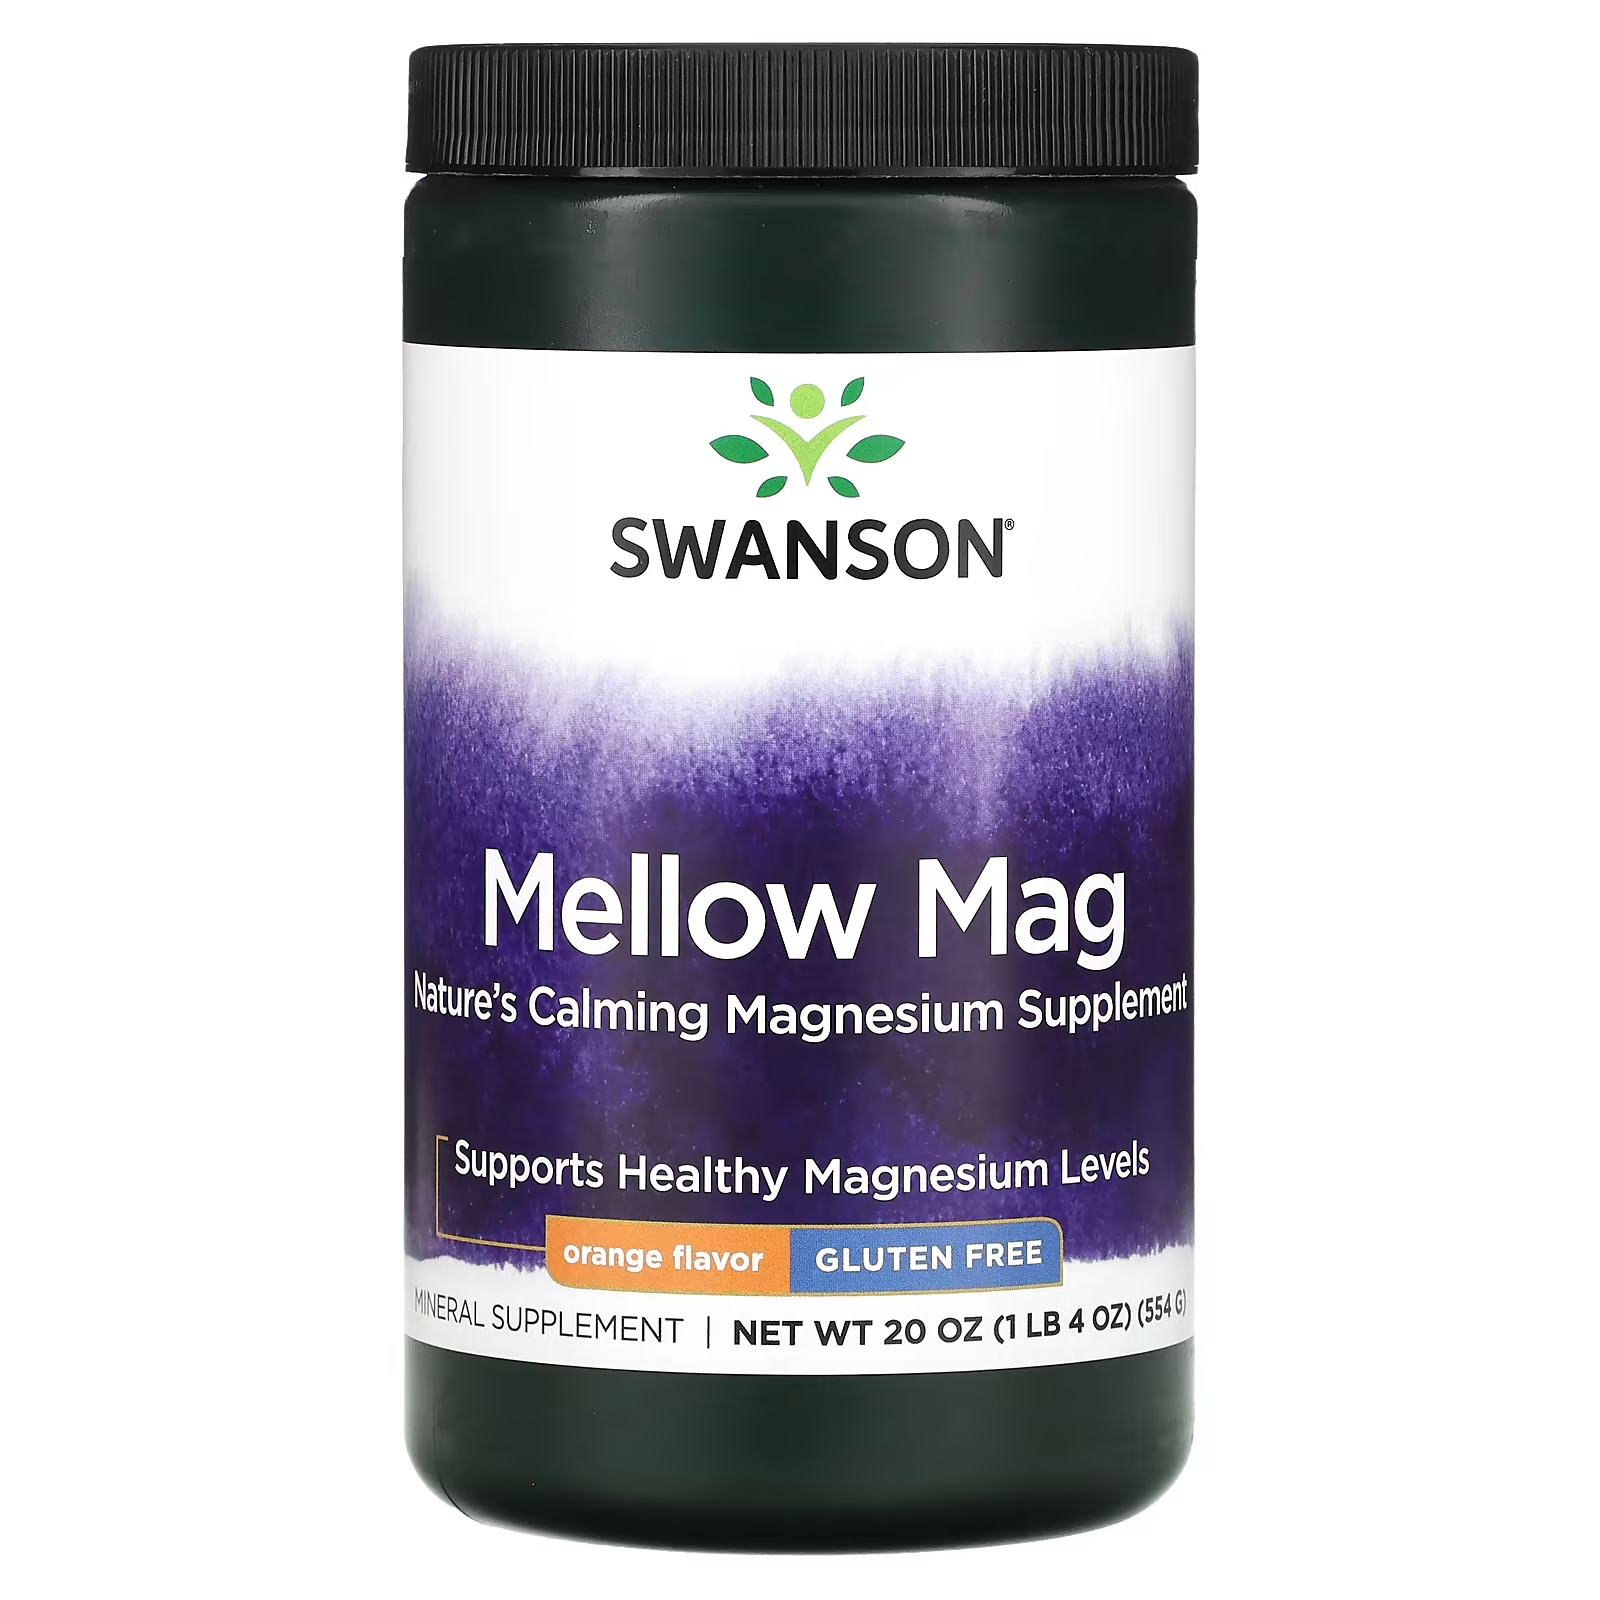 Пищевая добавка Swanson Mellow Mag со вкусом апельсина, 554 г пищевая добавка naturesplus магний со вкусом апельсина 522 г